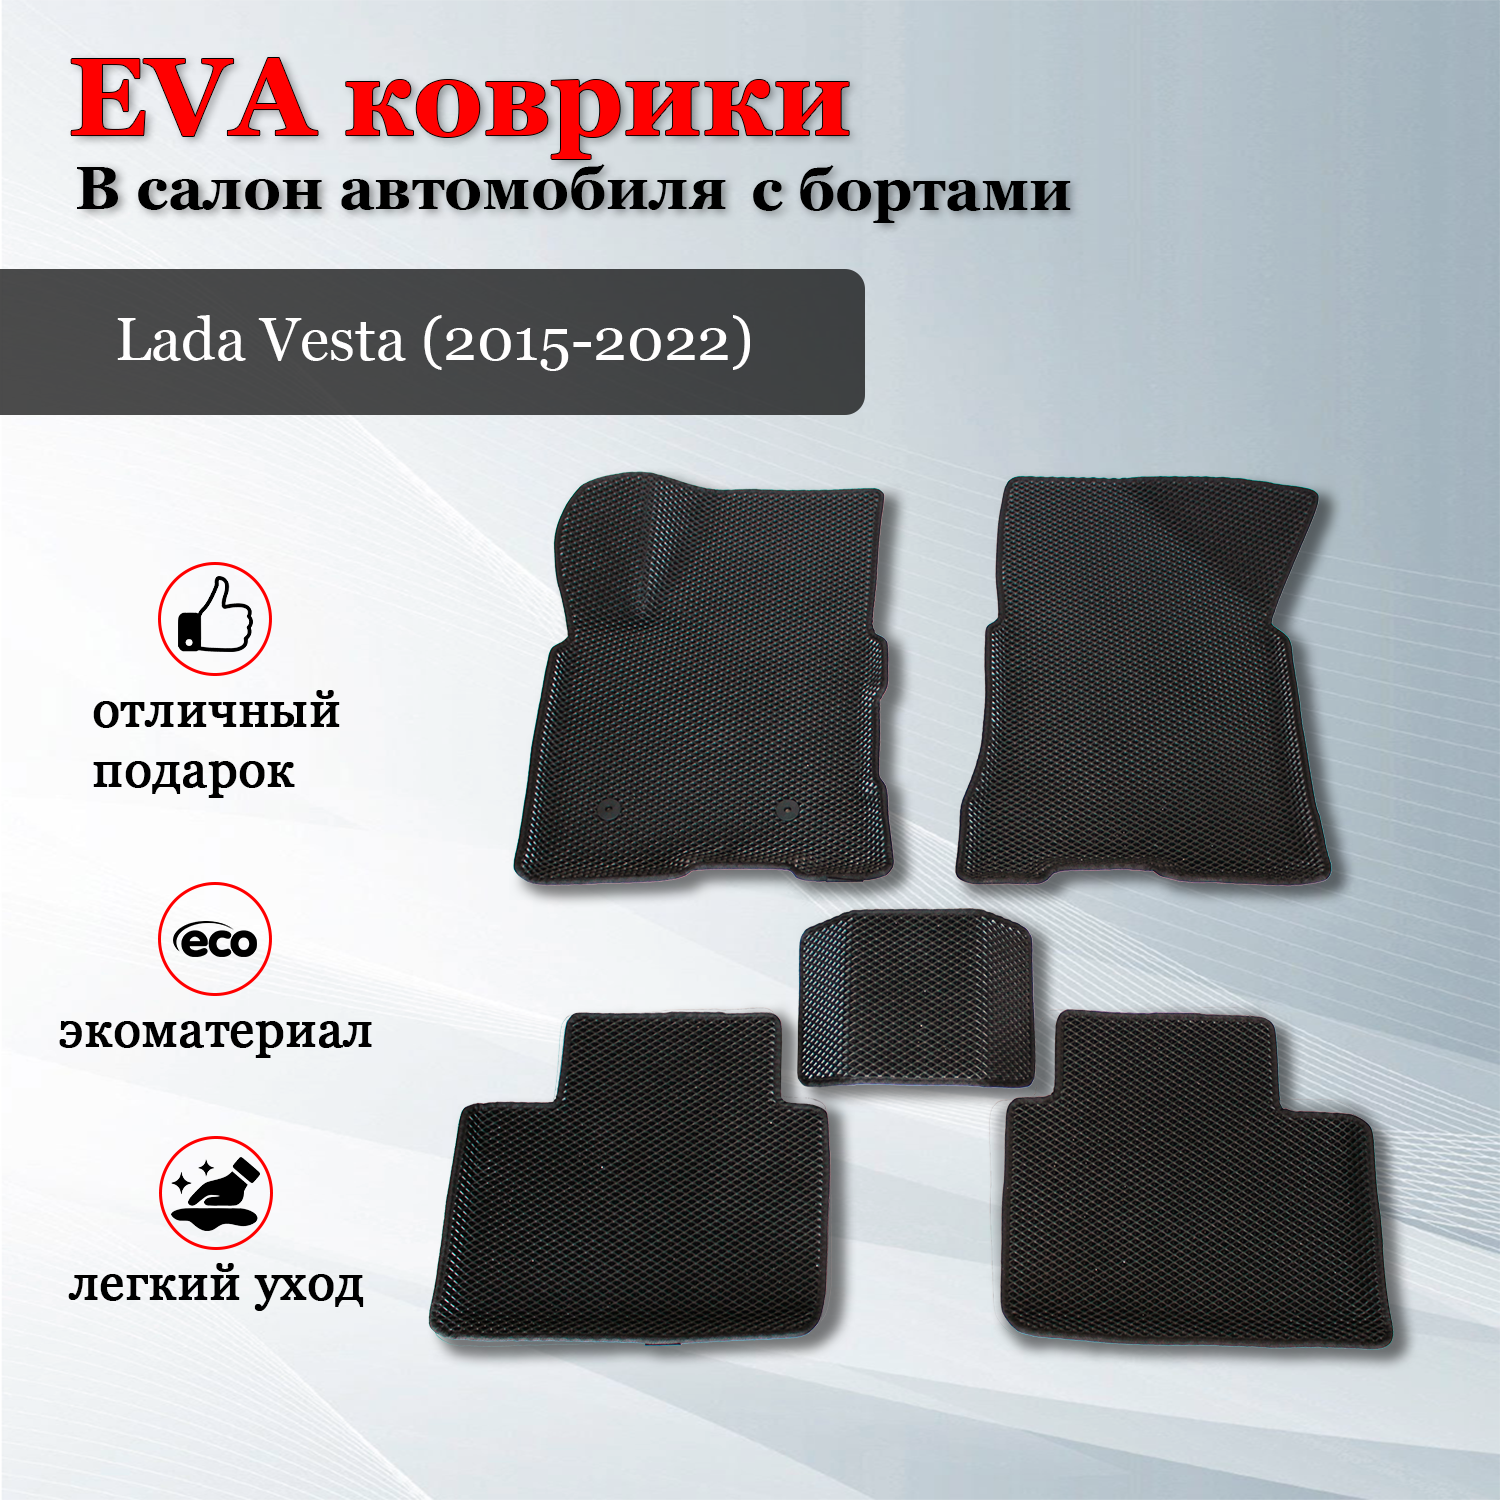 EVA (EВА ЭВА) коврики с бортами в салон автомобиля Лада Веста / Lada Vesta (2015-2022)